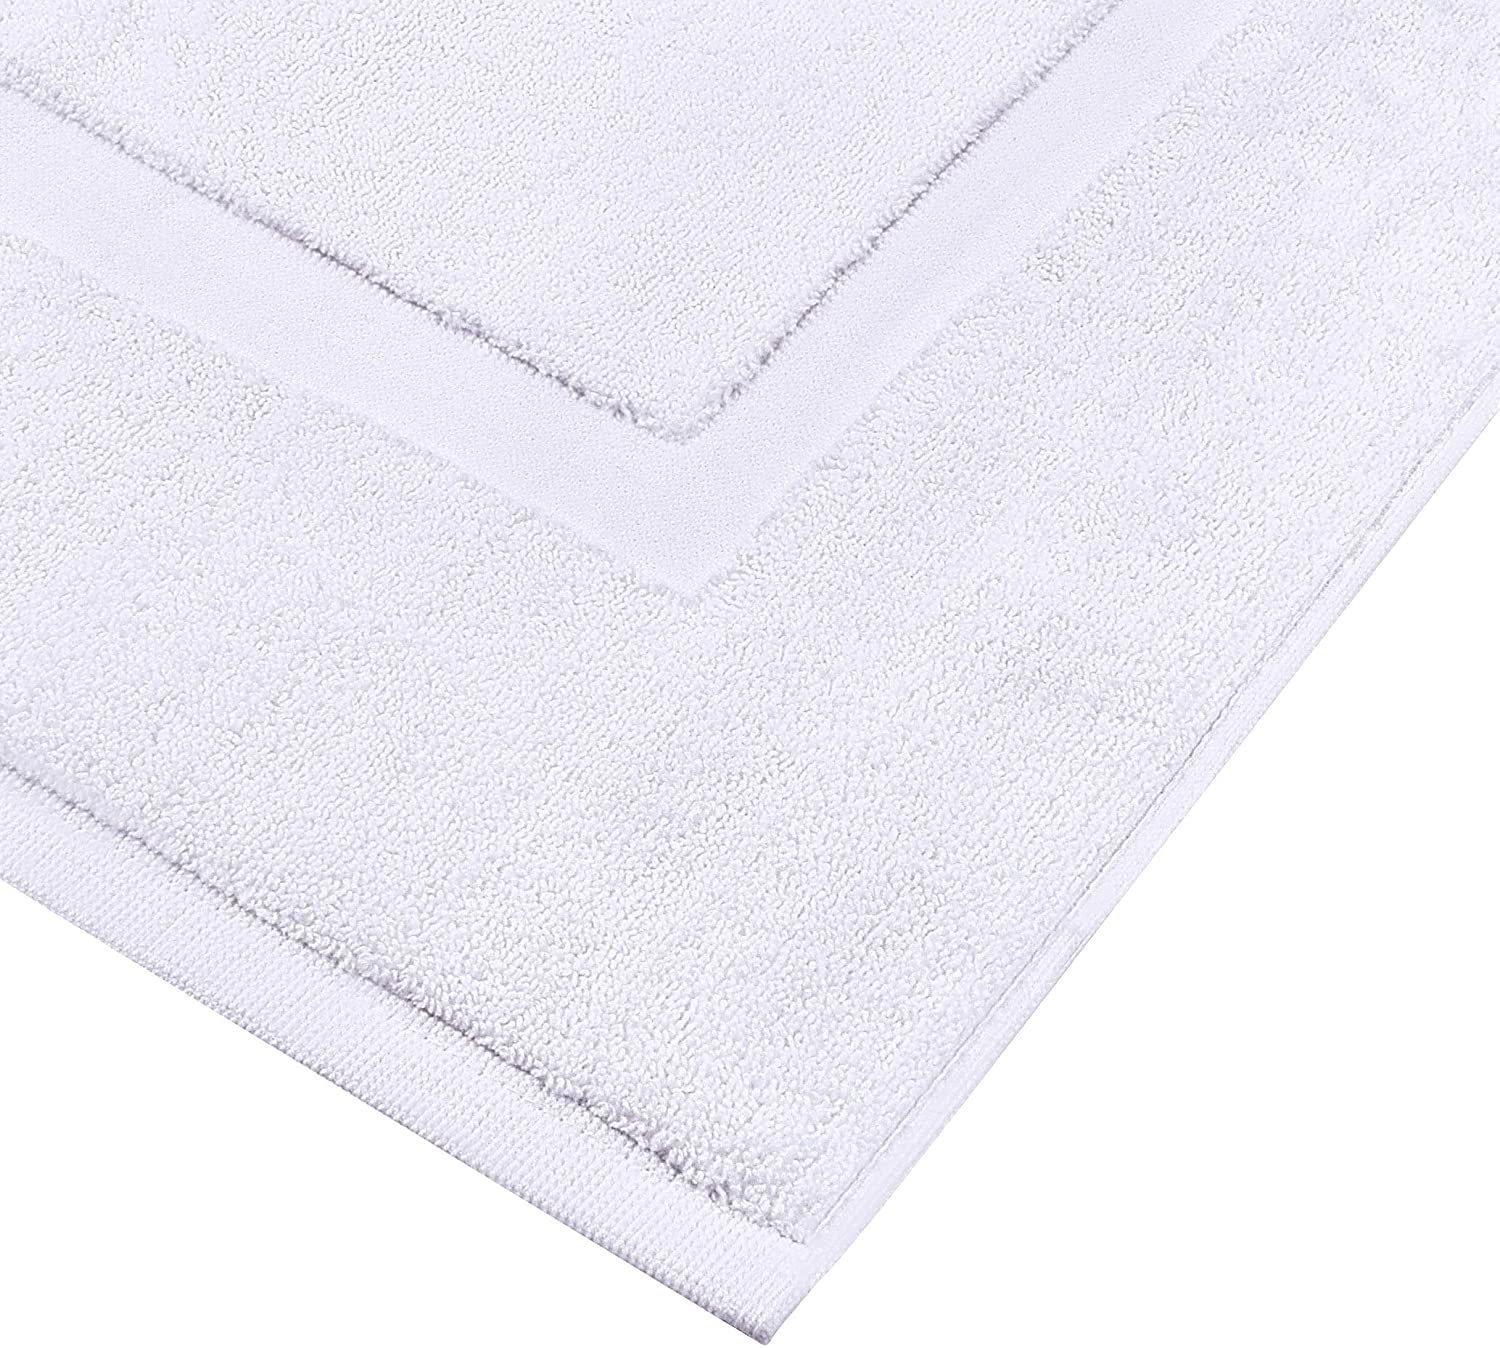 Cotton Banded Bath Mats, White [Not a Bathroom Rug] - 53 x 86 cm, 100% White